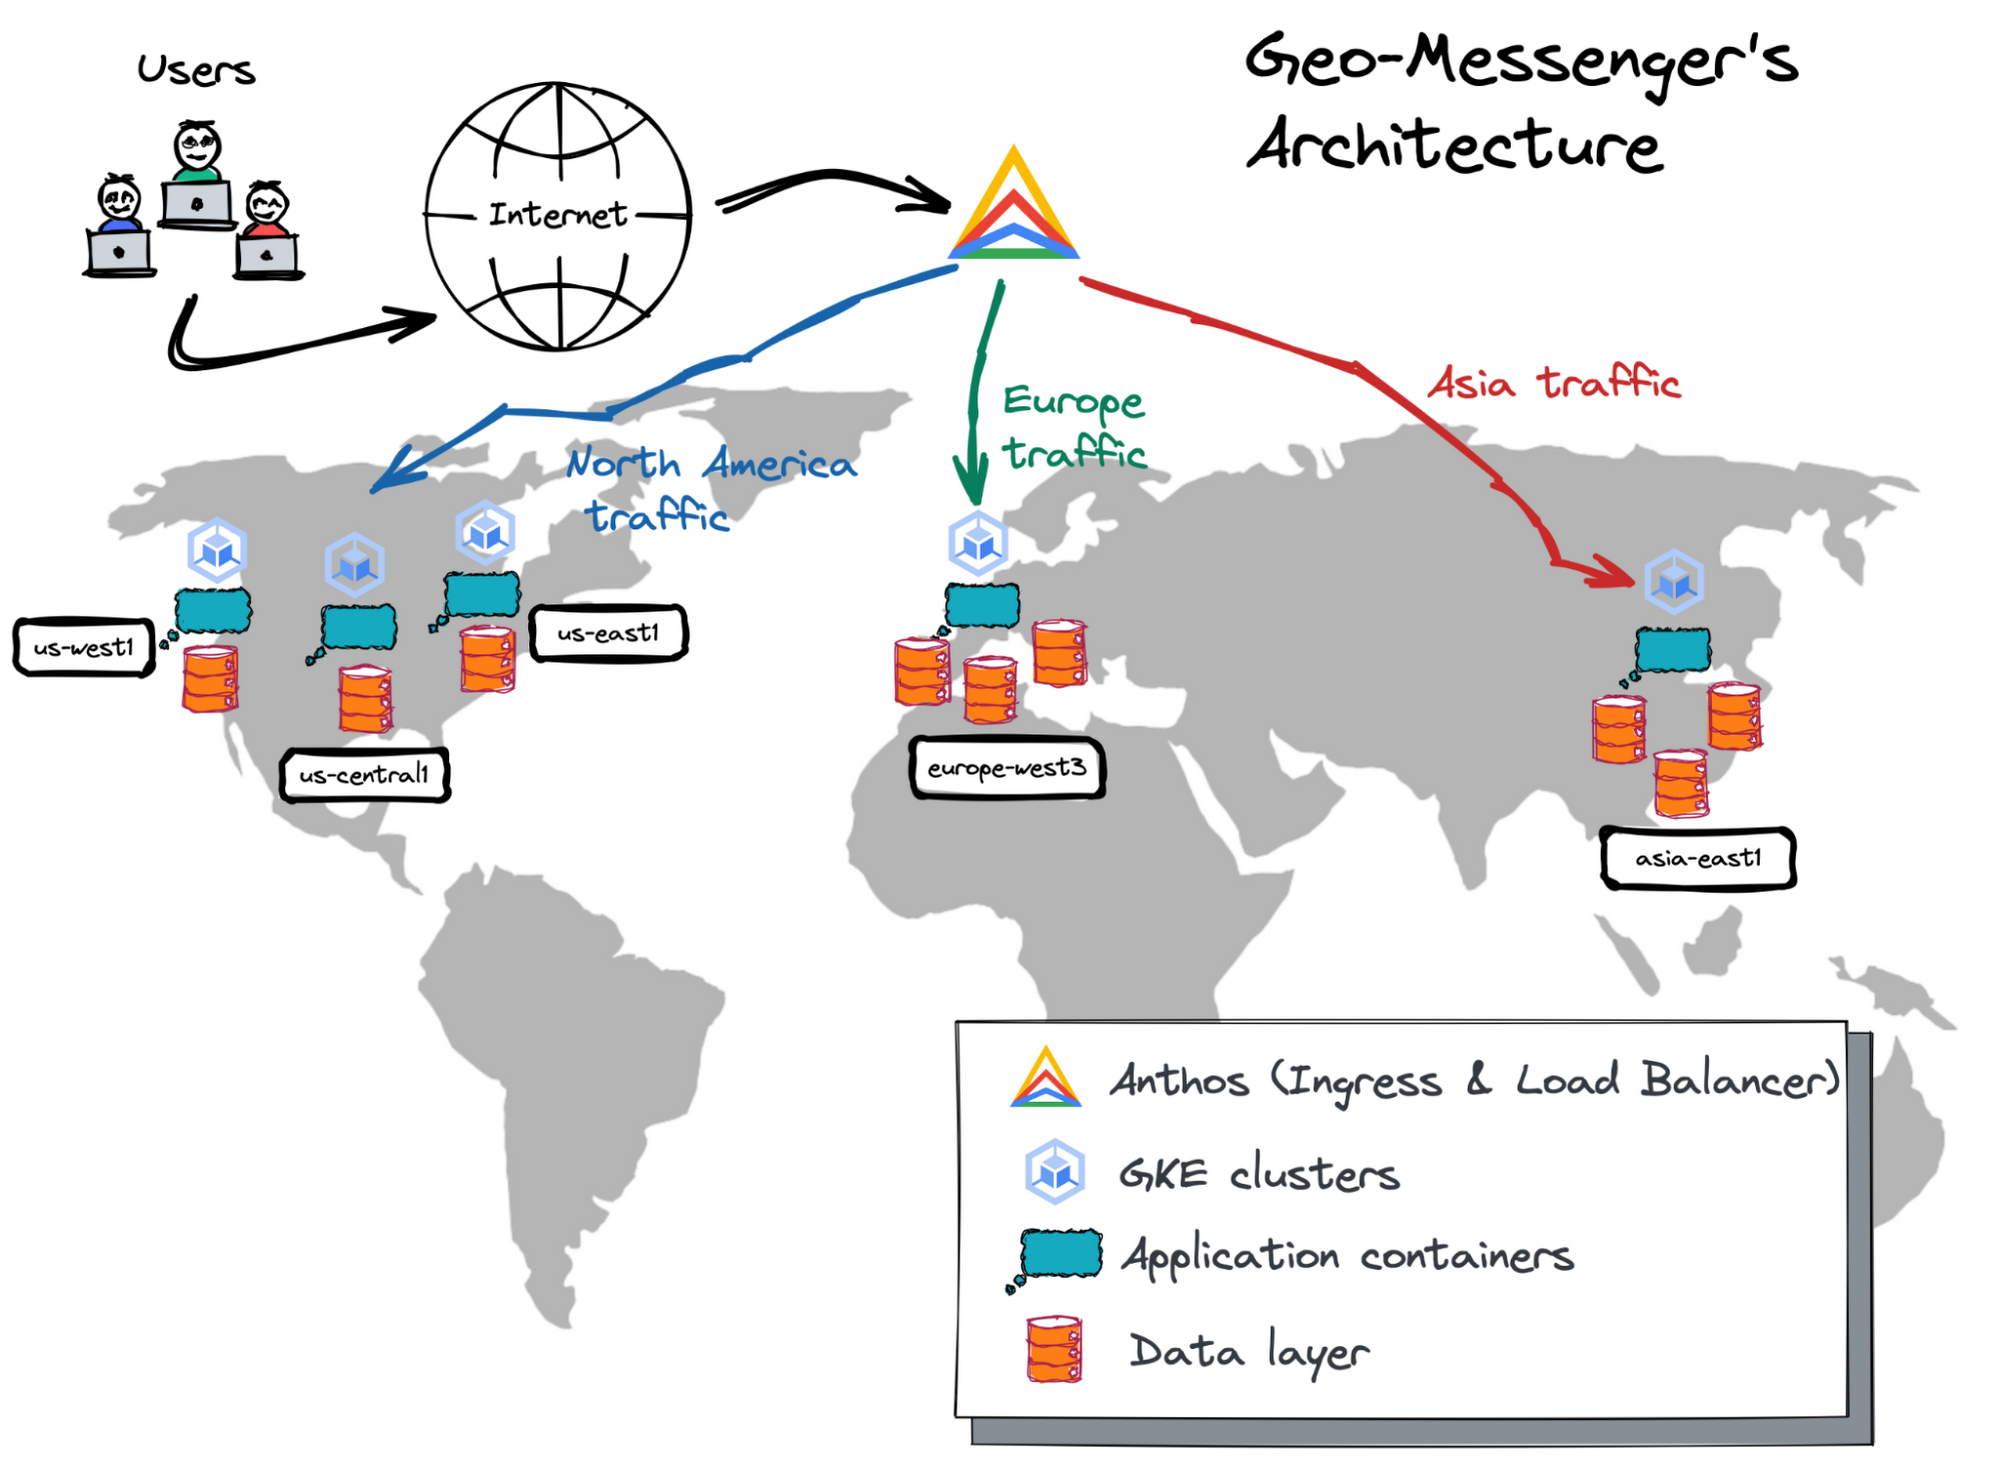 https://storage.googleapis.com/gweb-cloudblog-publish/images/1_geo_distributed_messenger_architecture.max-2000x2000.png